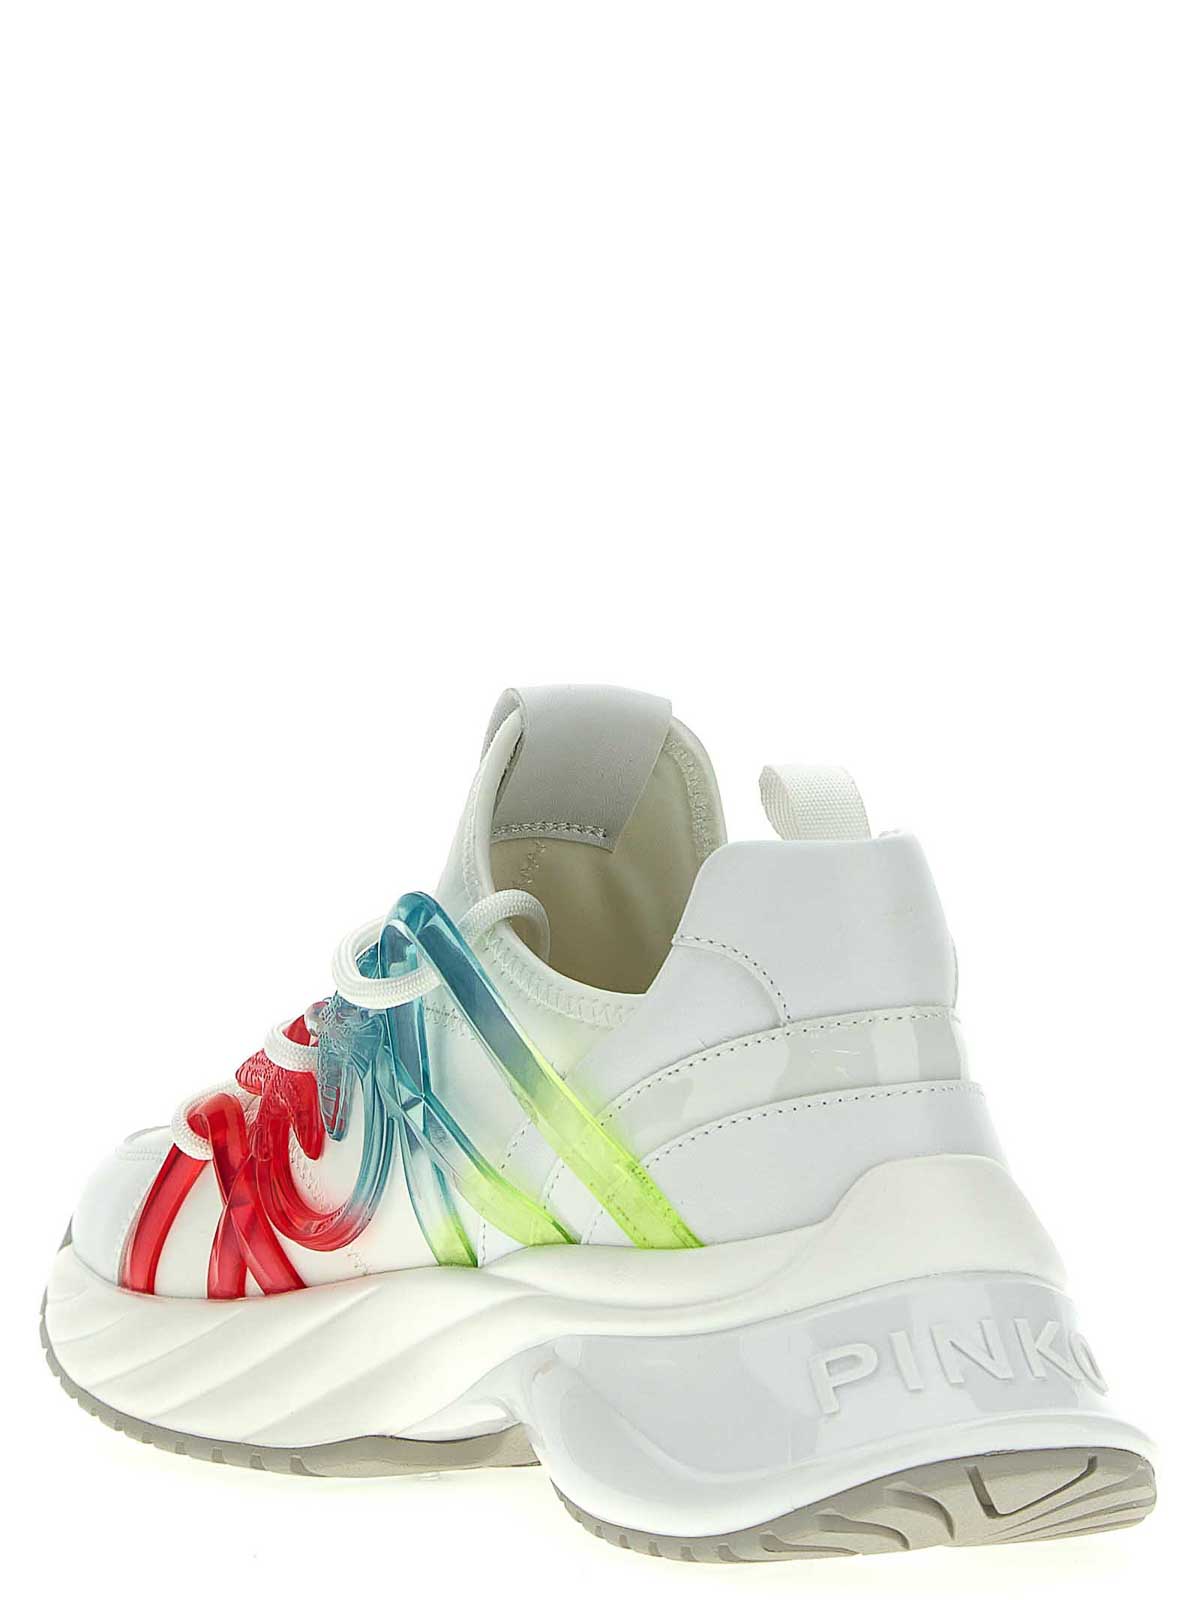 Shop Pinko Ariel 01 Sneakers In Multicolour